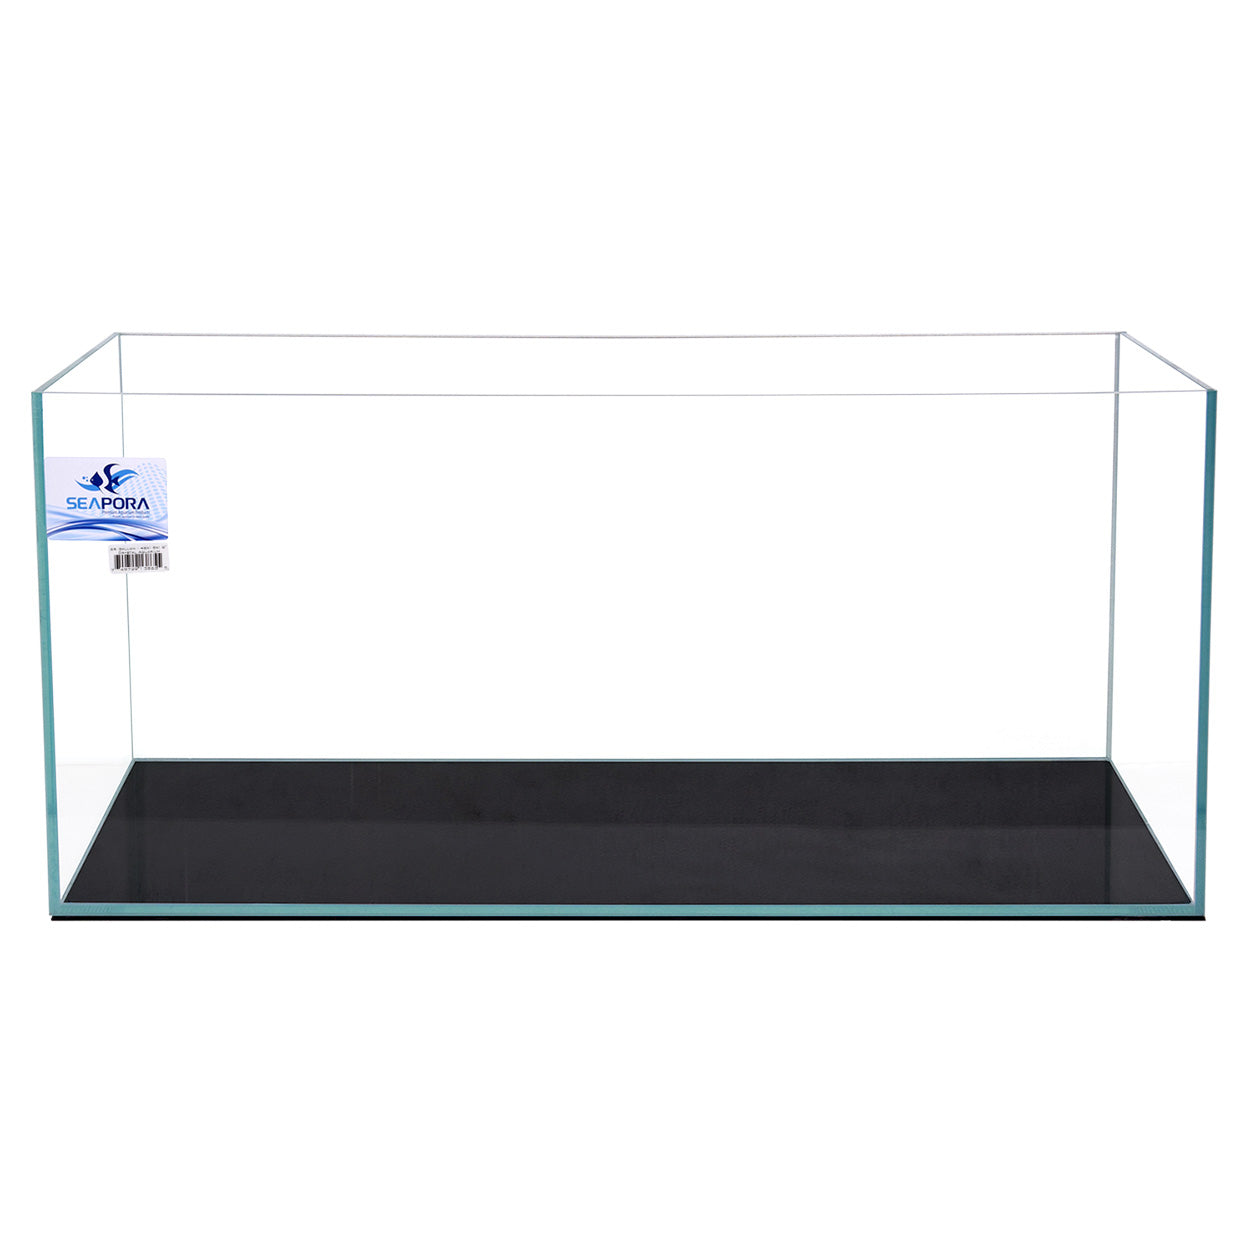 Seapora Crystal Series Aquarium (Special Order Product *Most Sizes*)